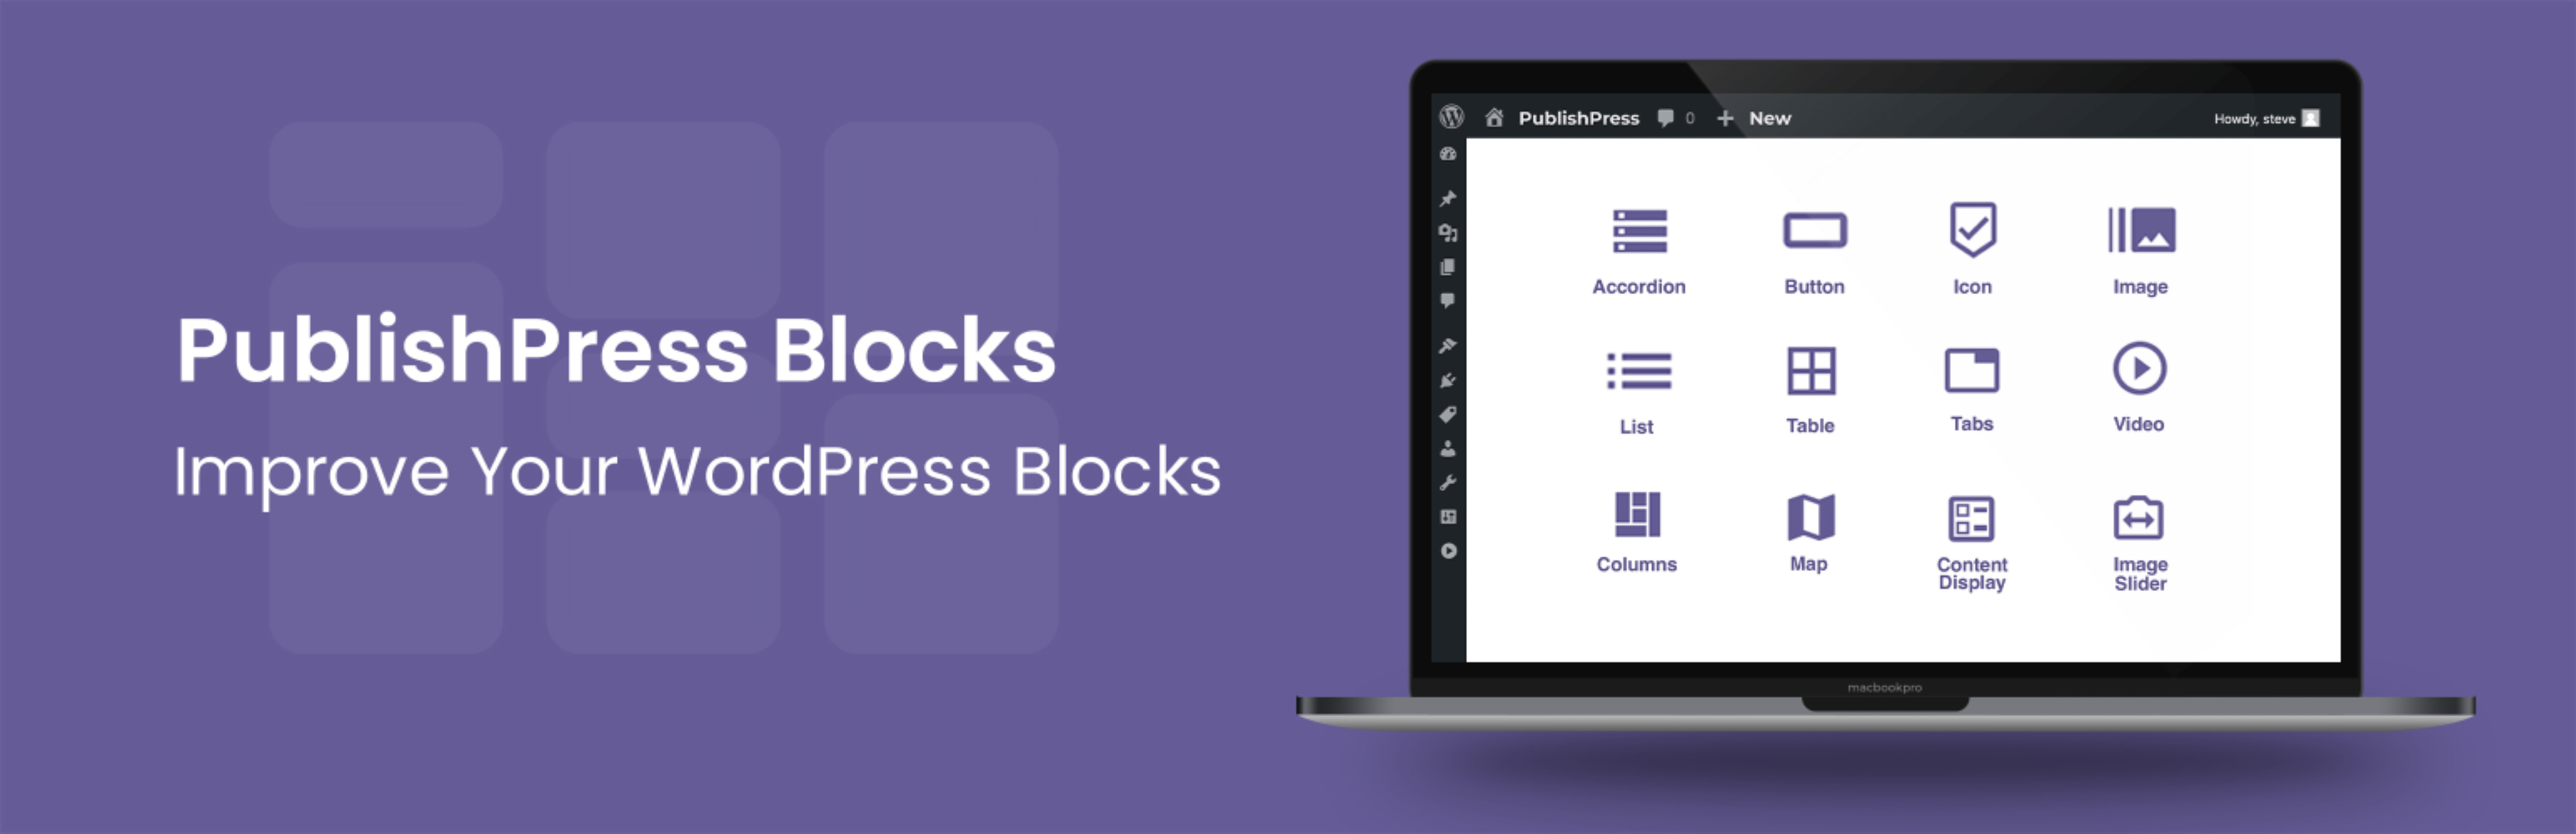 Gutenberg Blocks – PublishPress Blocks Gutenberg Editor Plugin